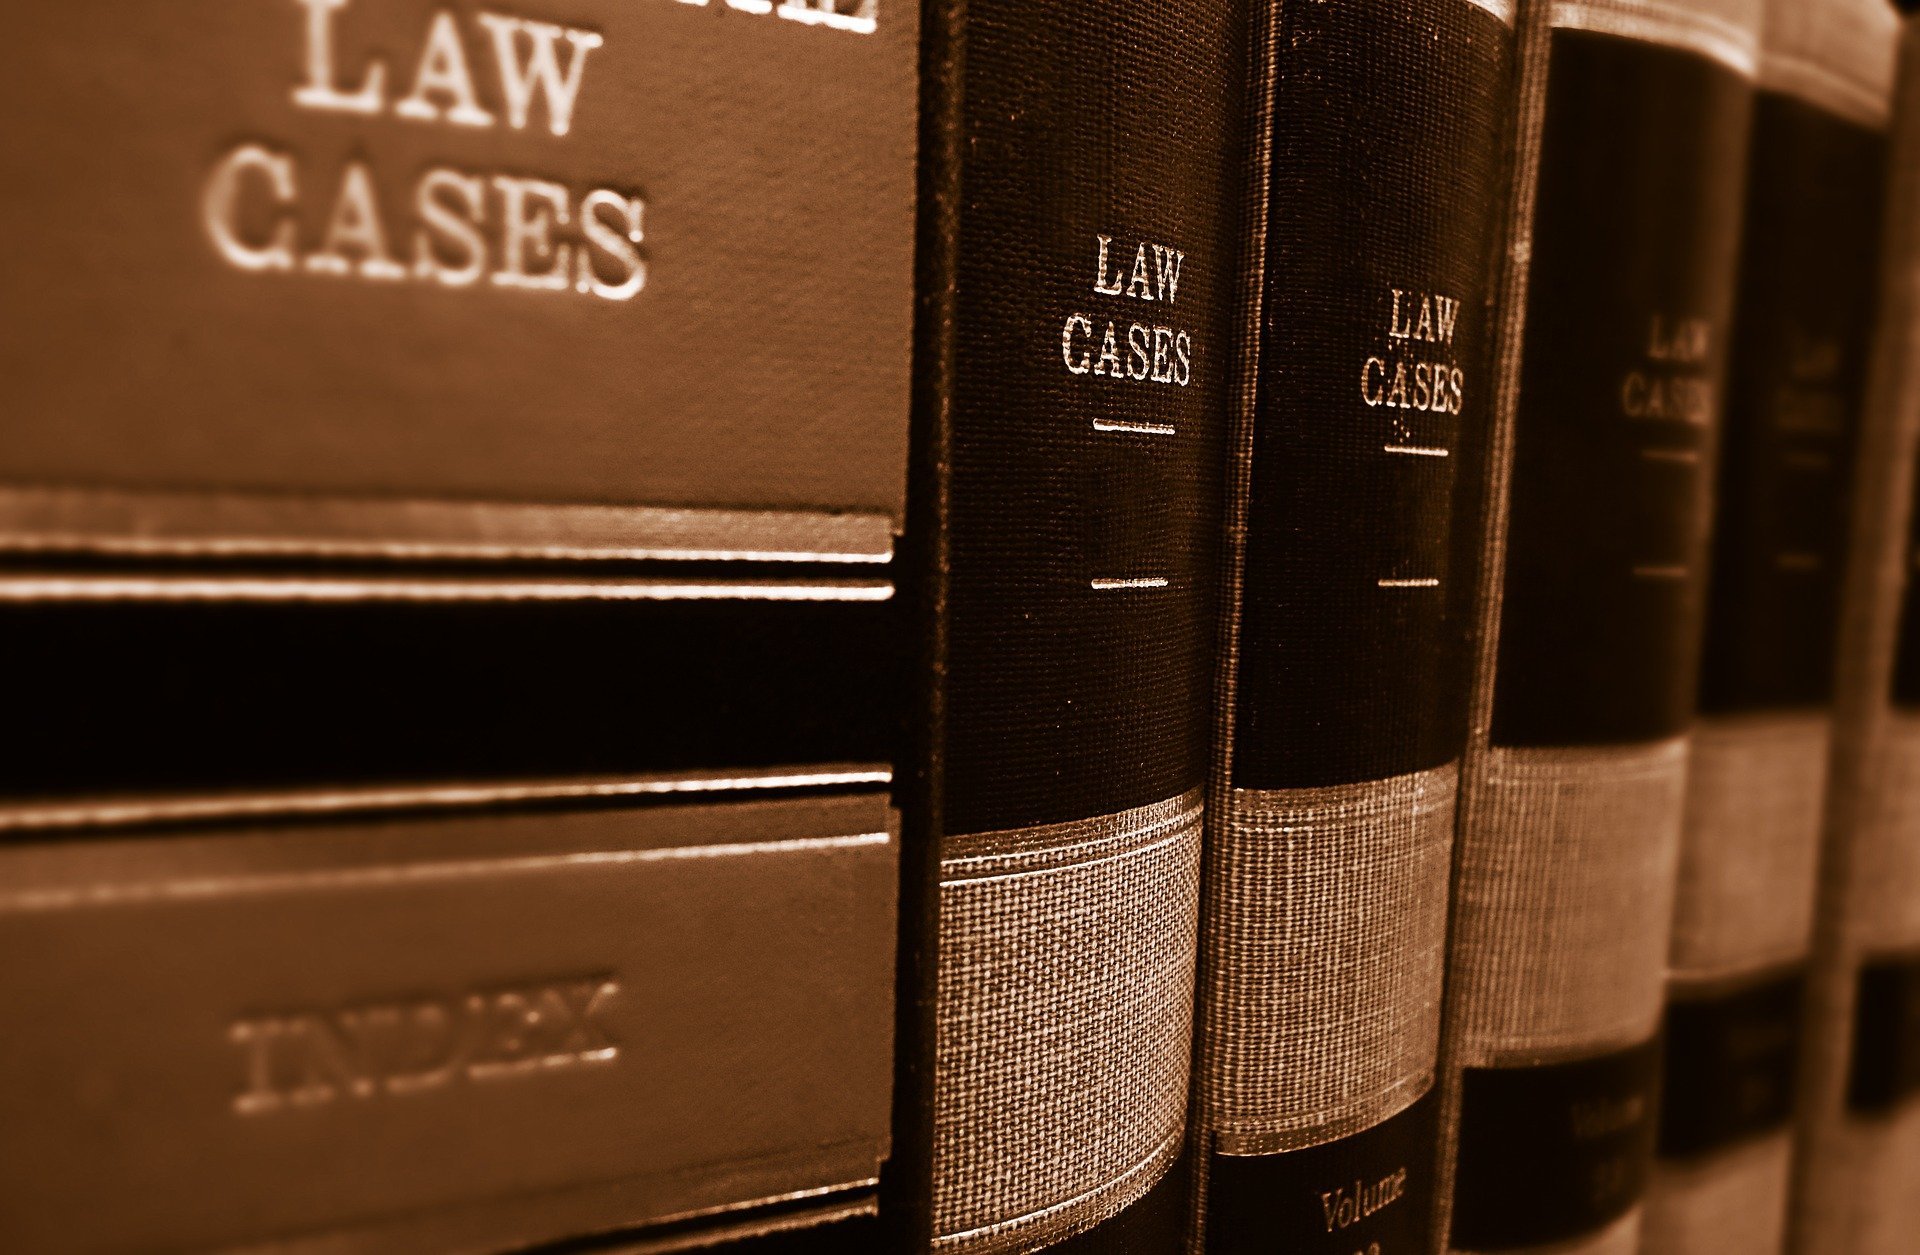 Law books | Source: Pixabay